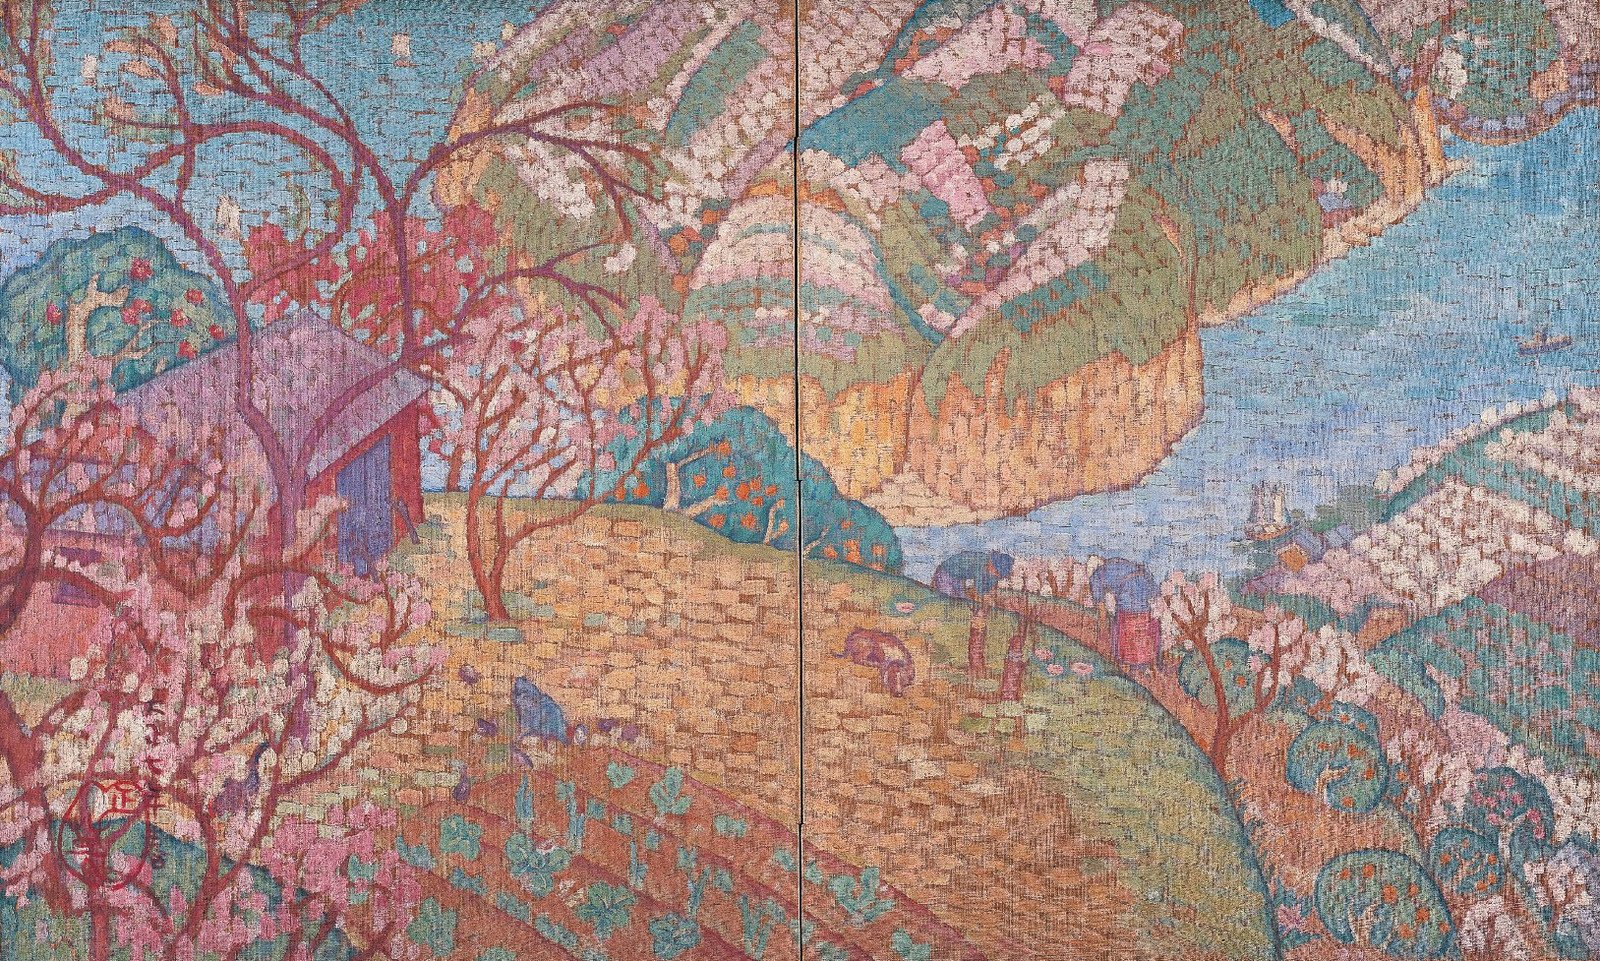 Masamu Yanase, Orchard, 1918.